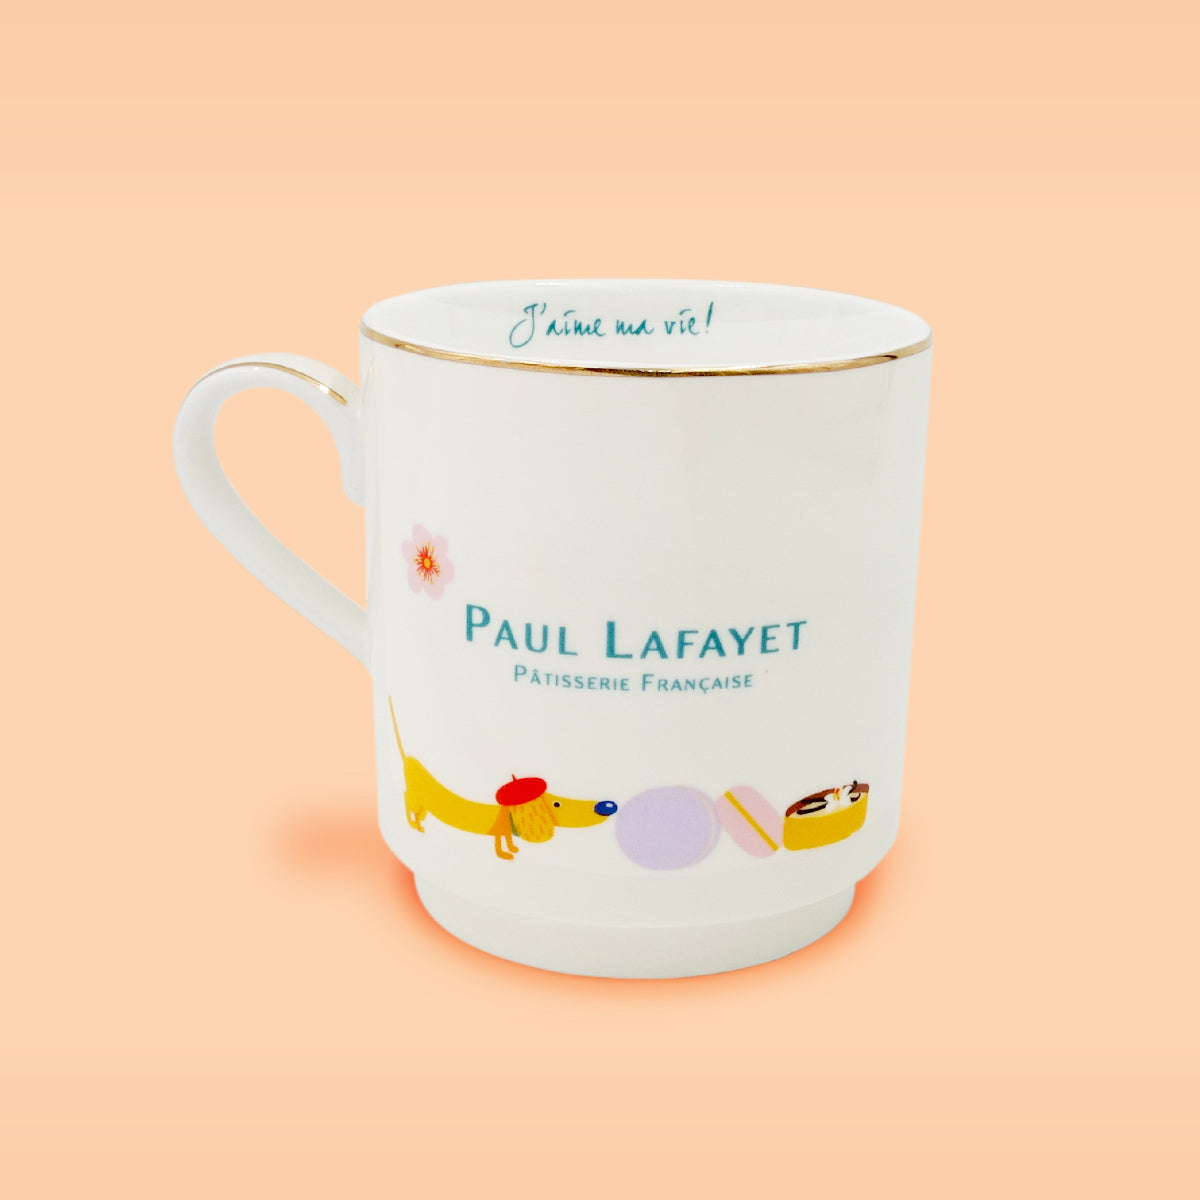 Paul Lafayet Mug - Paris Lady (Buy 10 Get 12)